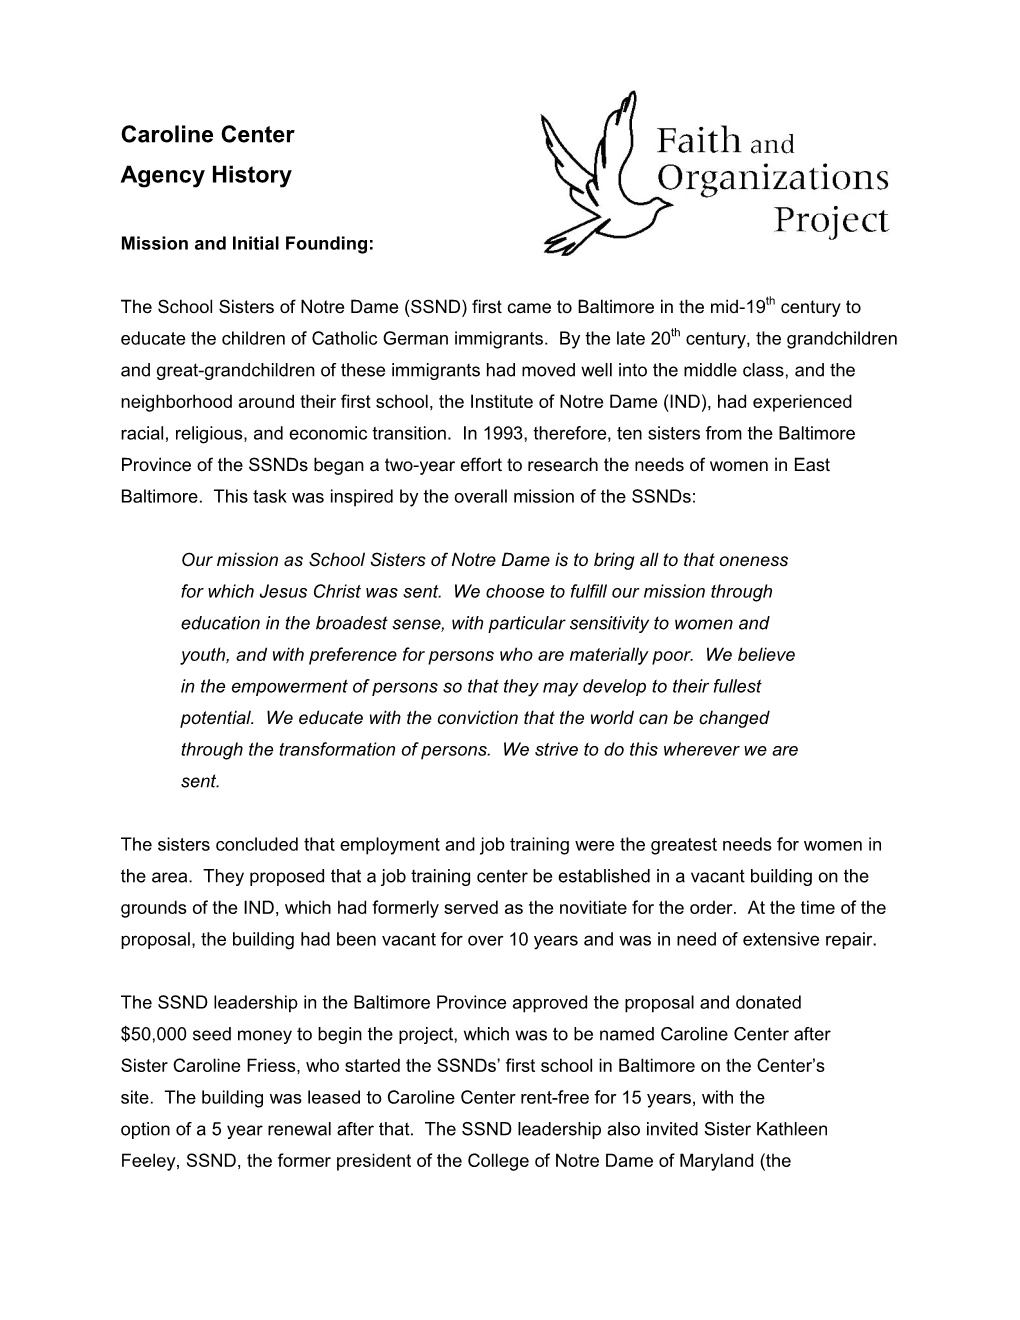 Caroline Center Agency History